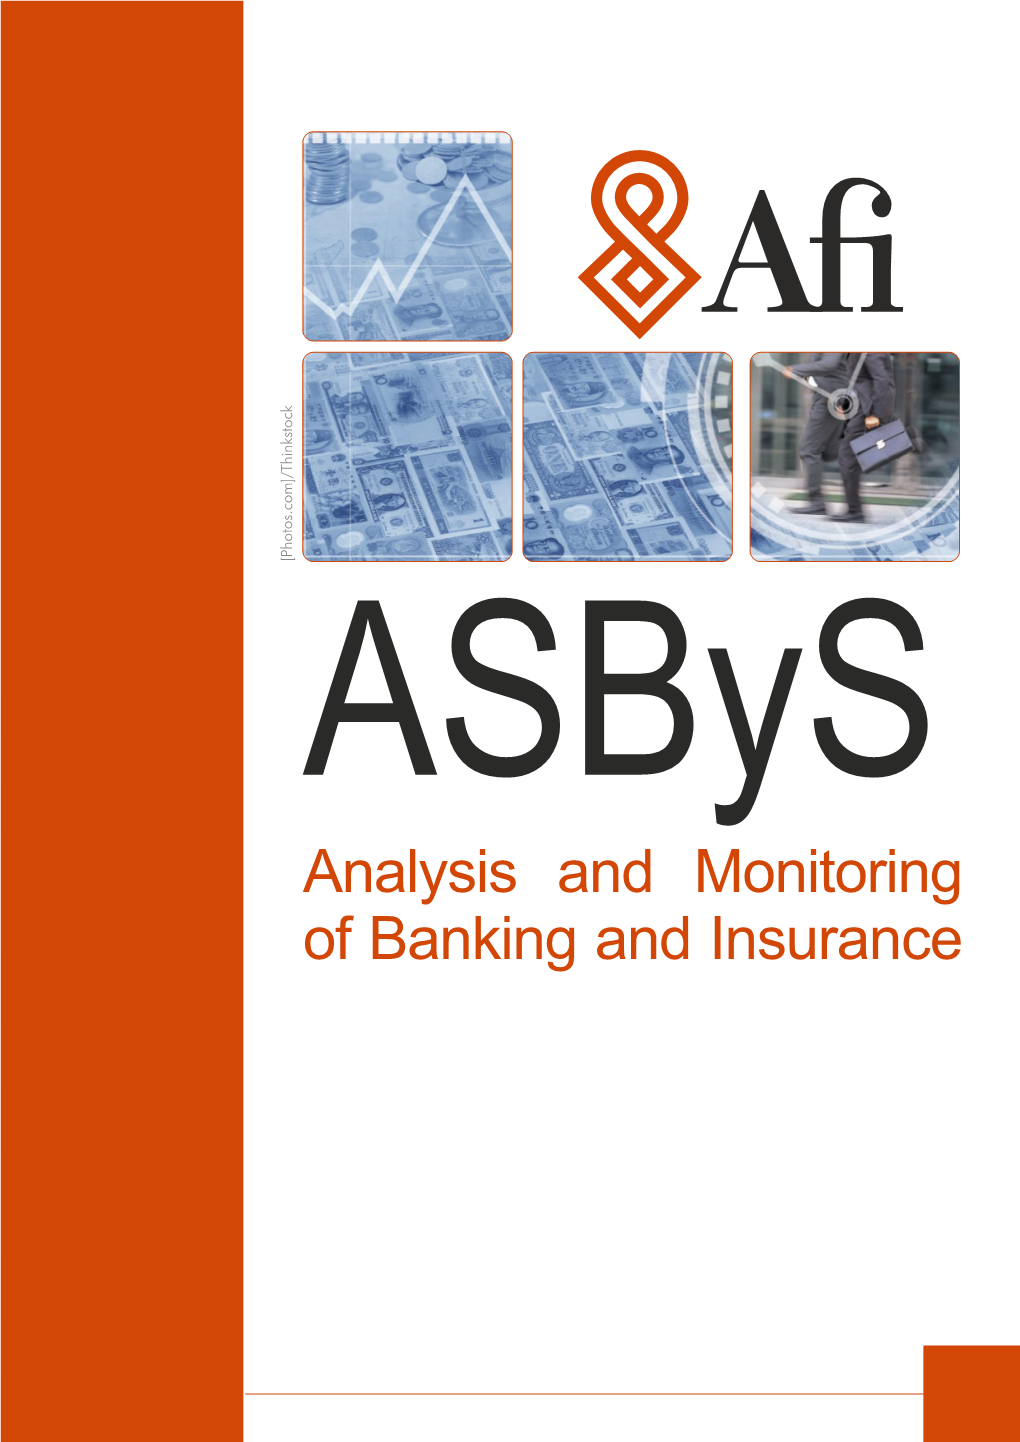 Analysis and Monitoring of Banking and Insurance (Asbys)